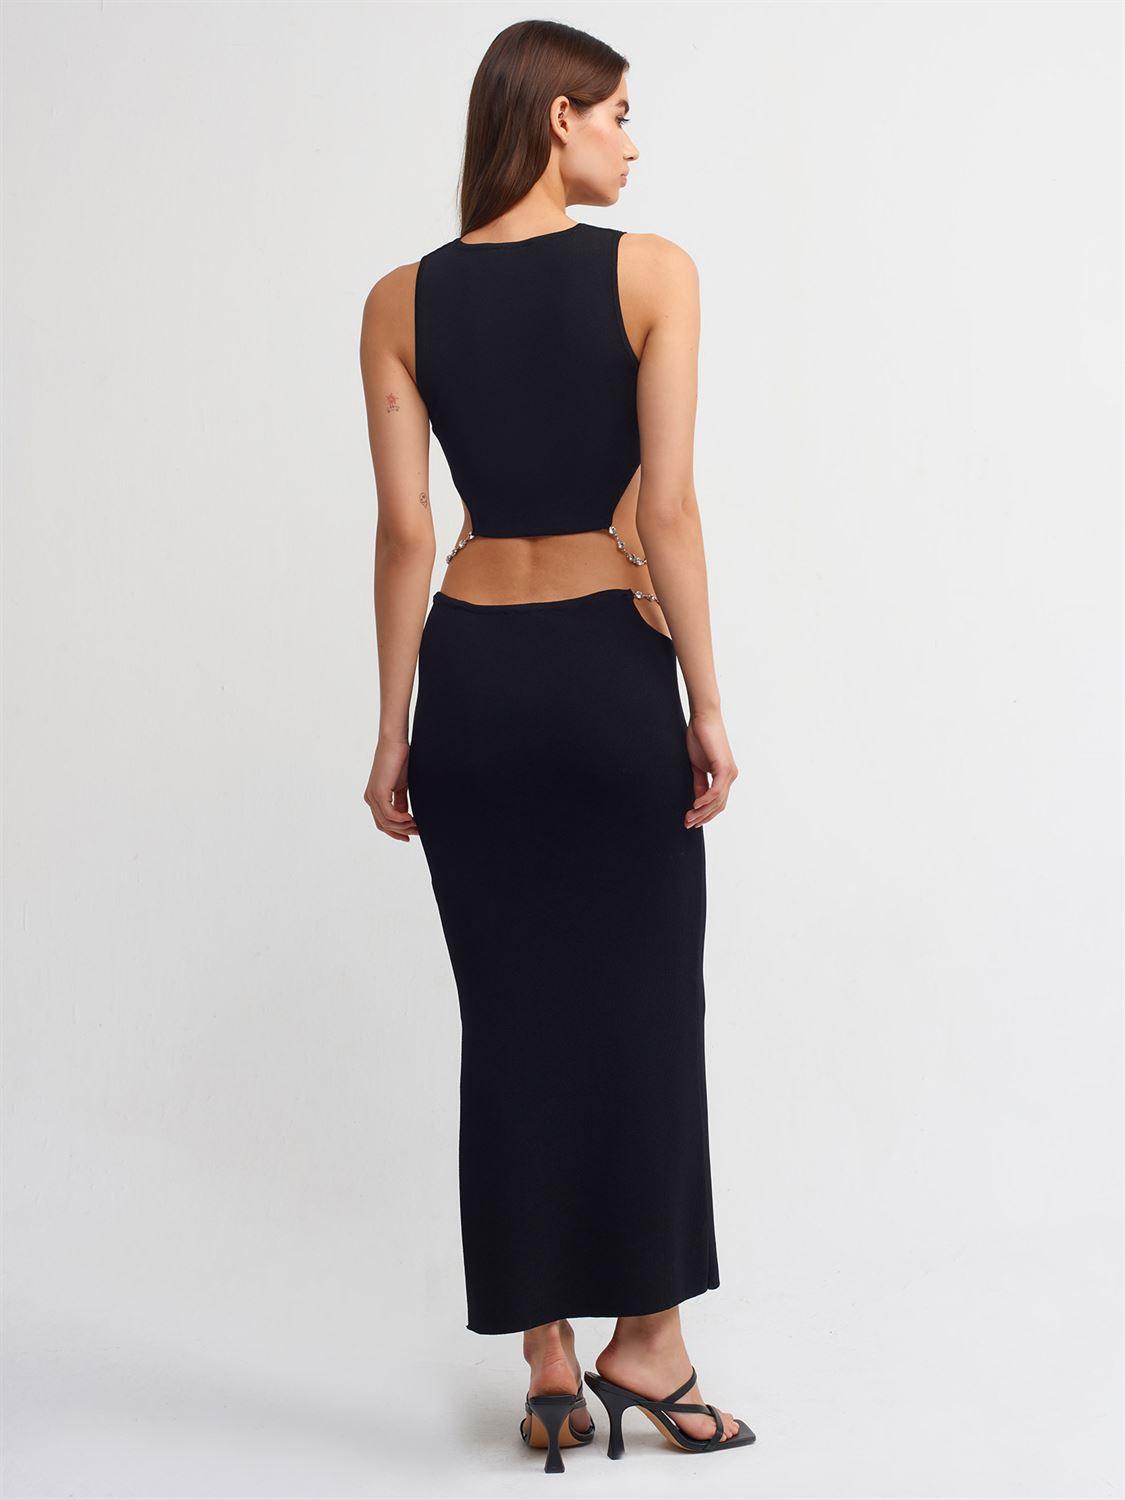 Waist Low-Cut Stone Tricot Skirt Black / One Size ZEFASH